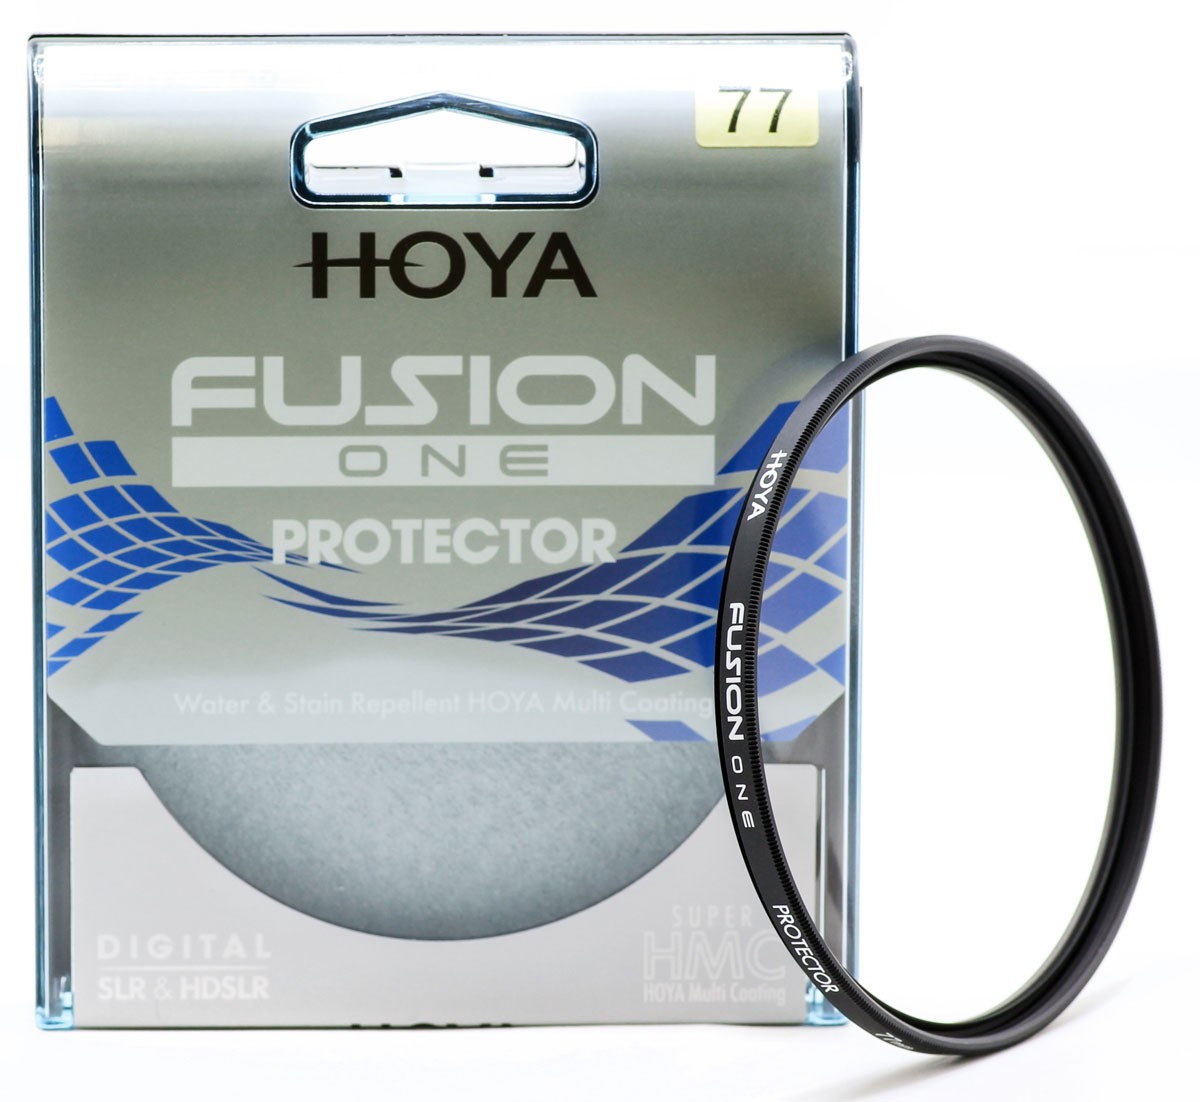 Hoya fusion one protector